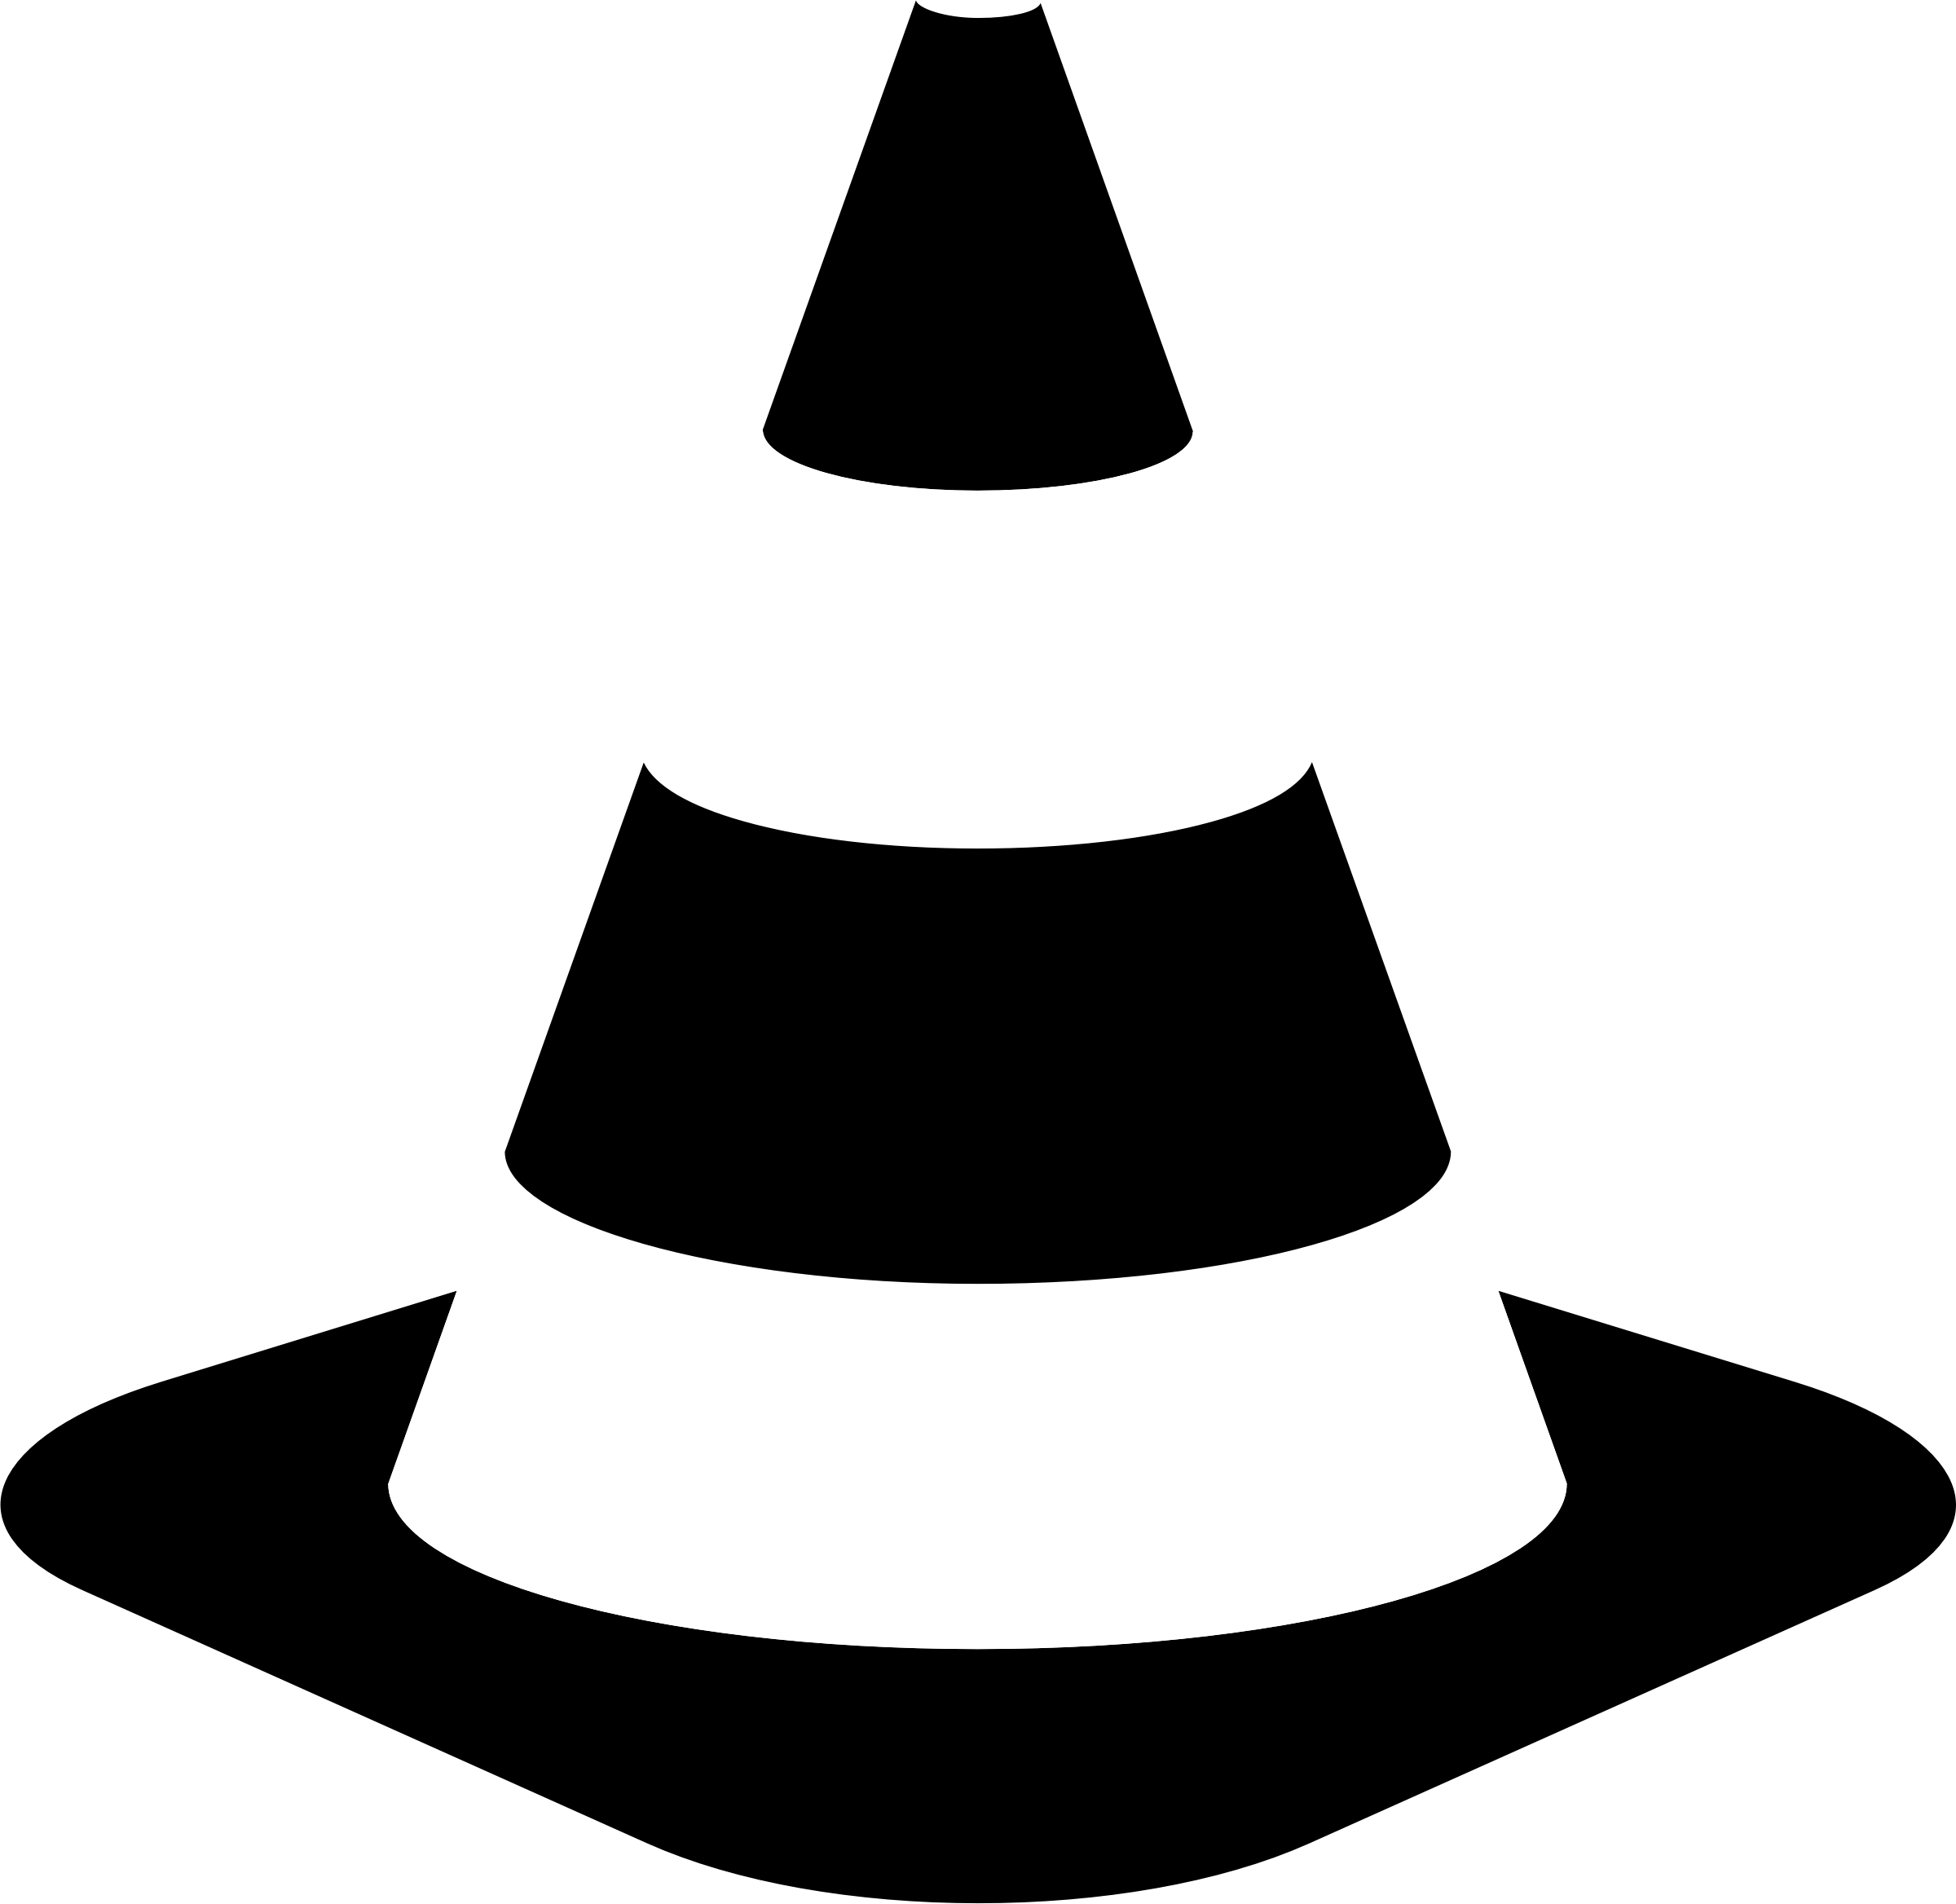 Black and white traffic Cones